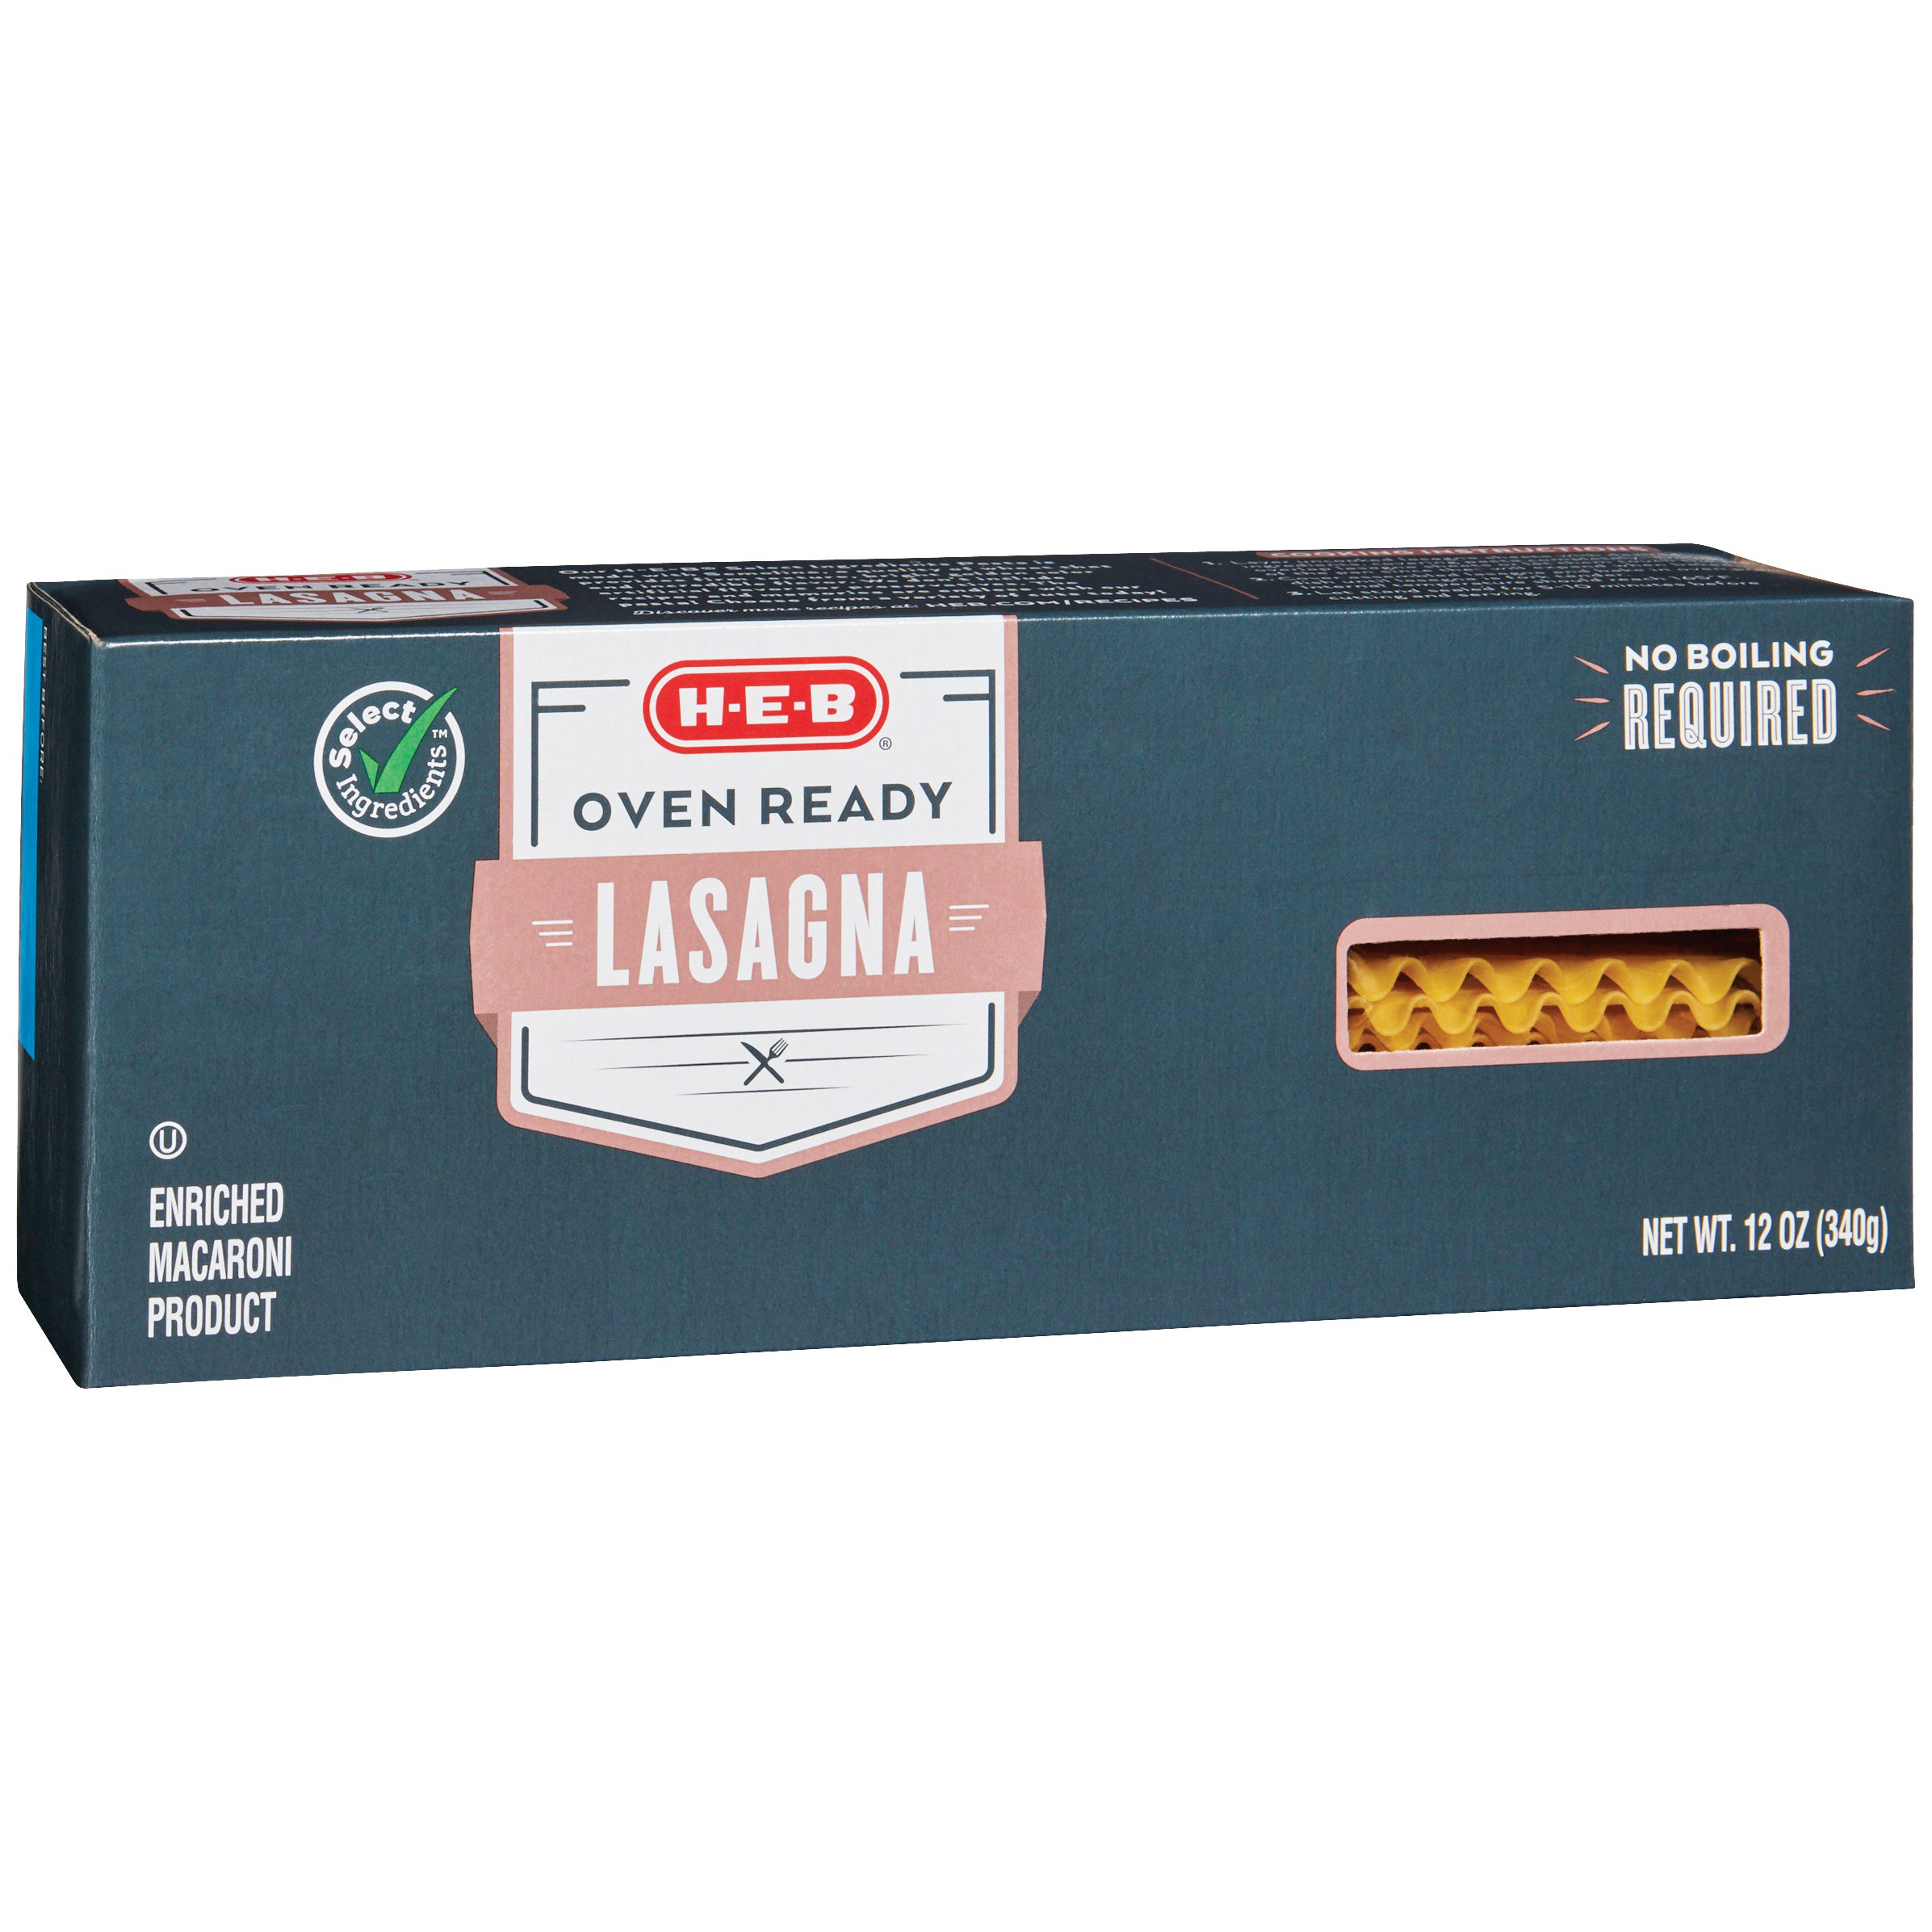 H E B Select Ingredients Oven Ready Lasagna Shop Pasta At H E B